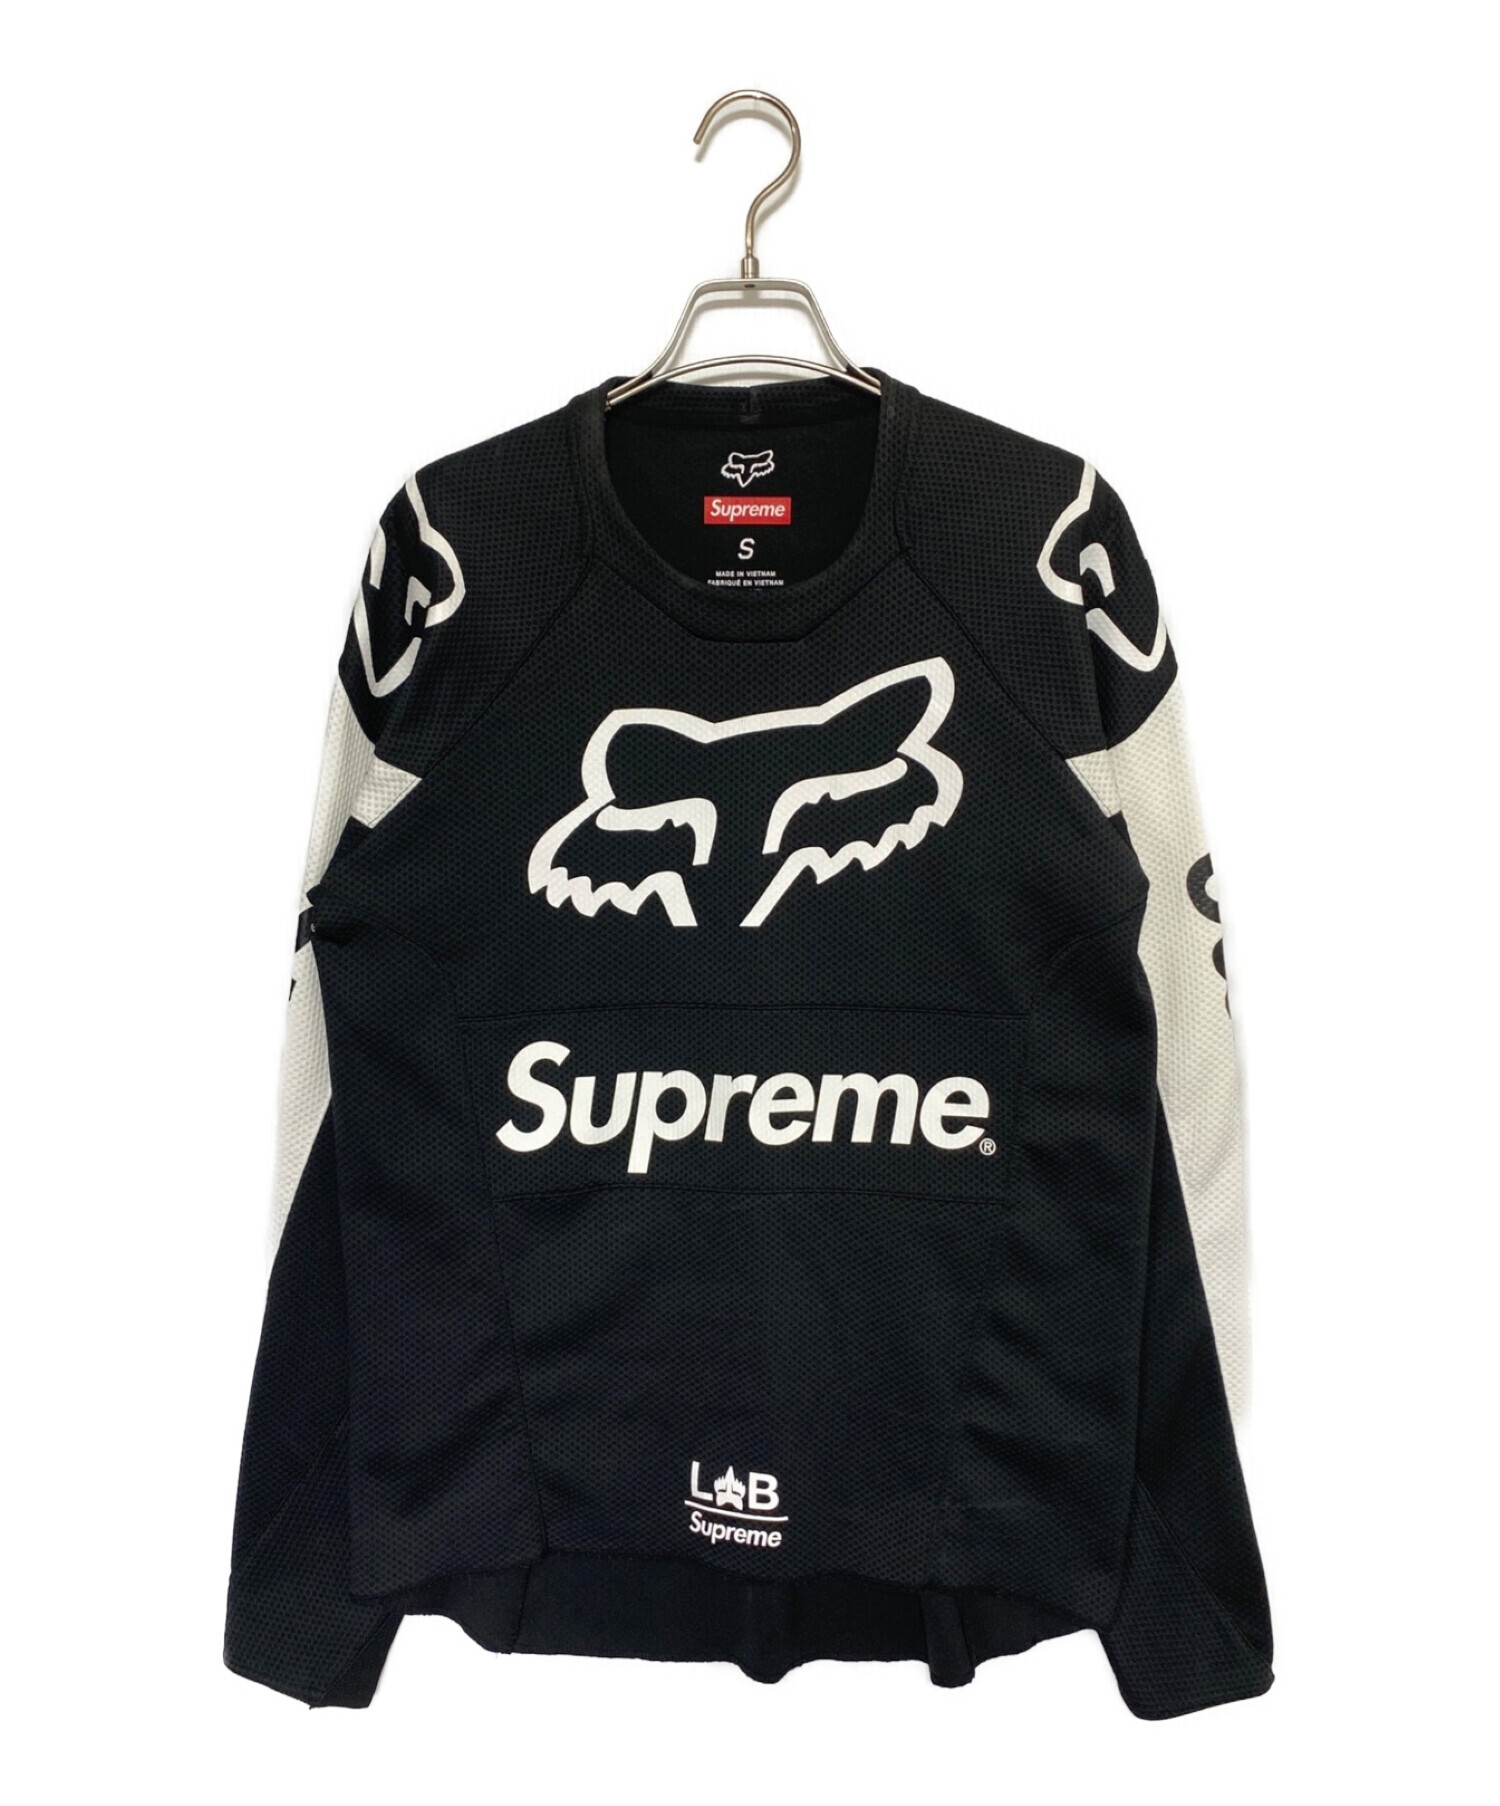 Supreme®/Fox Racing® Moto Jersey Top 黒